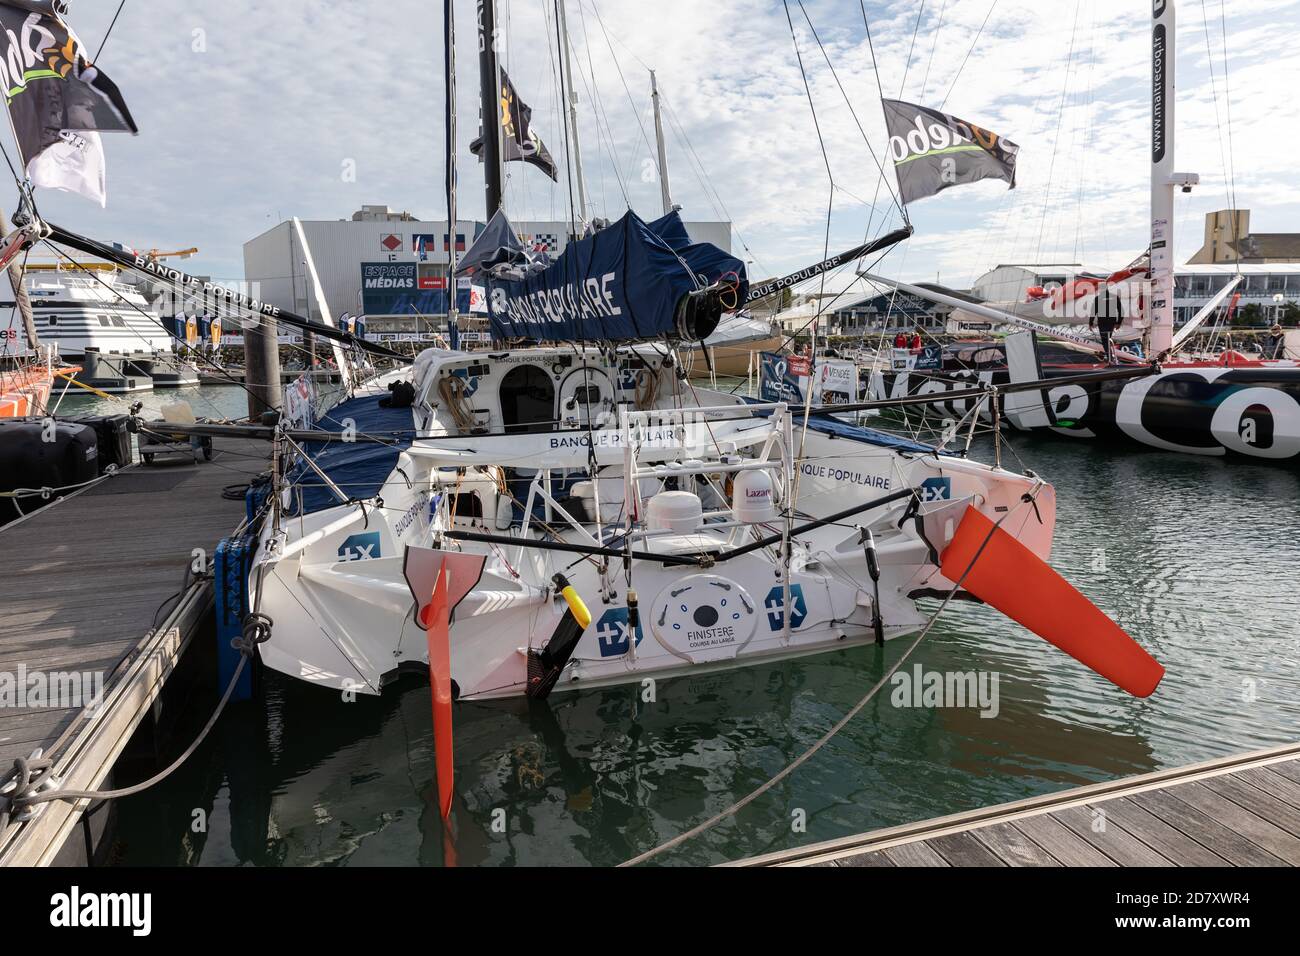 News - Clarisse Crémer to sail around the world - Vendée Globe - En